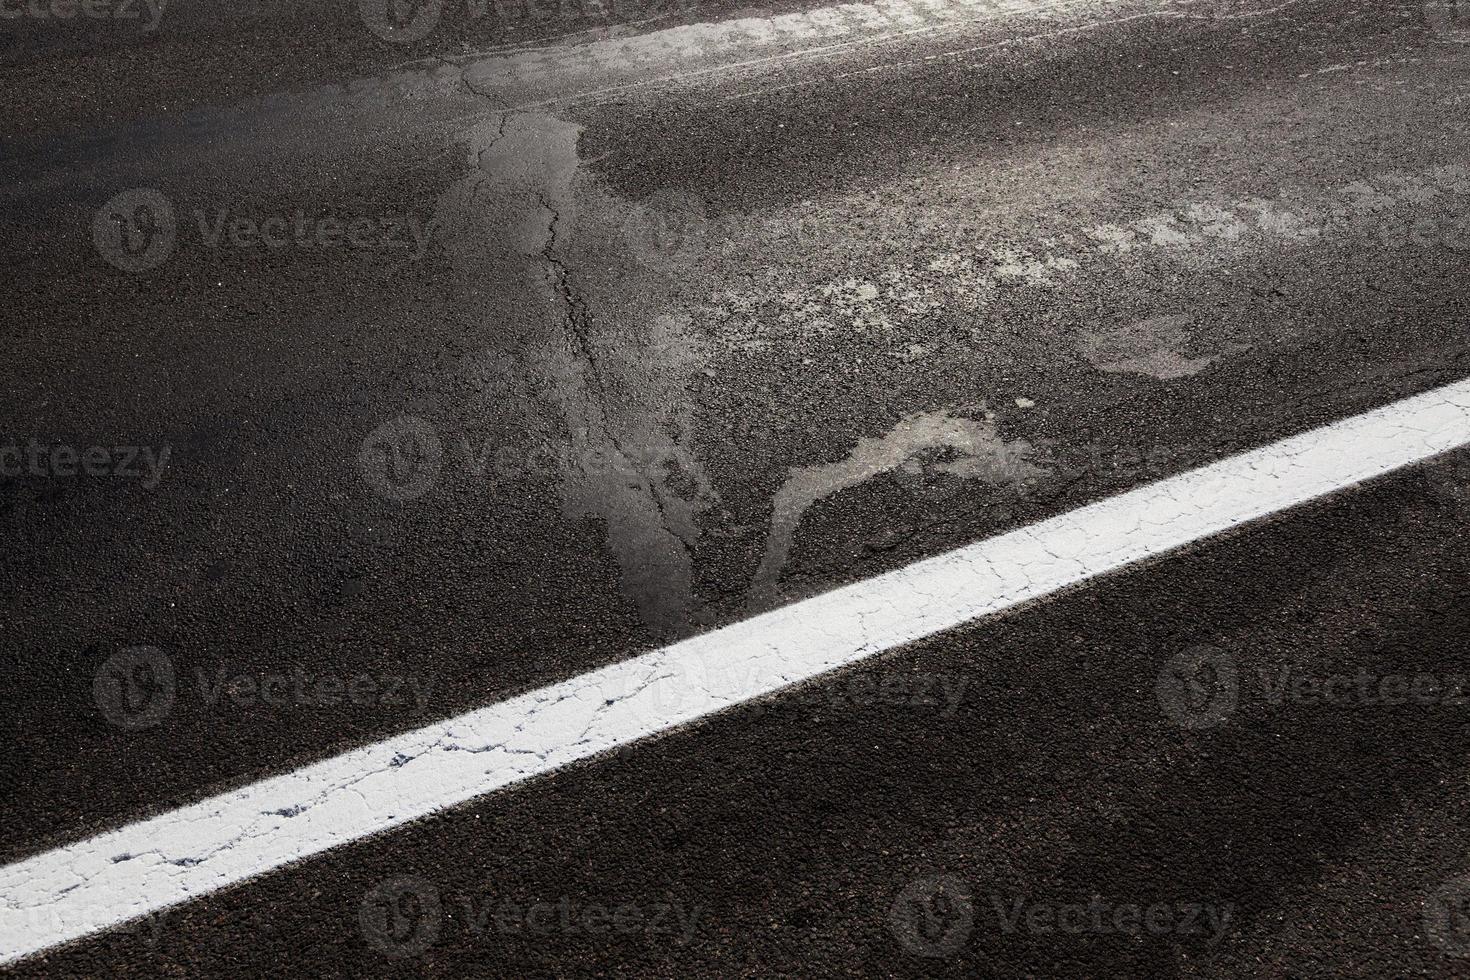 carretera pavimentada, un primer plano de una parte de la calzada de una carretera asfaltada foto